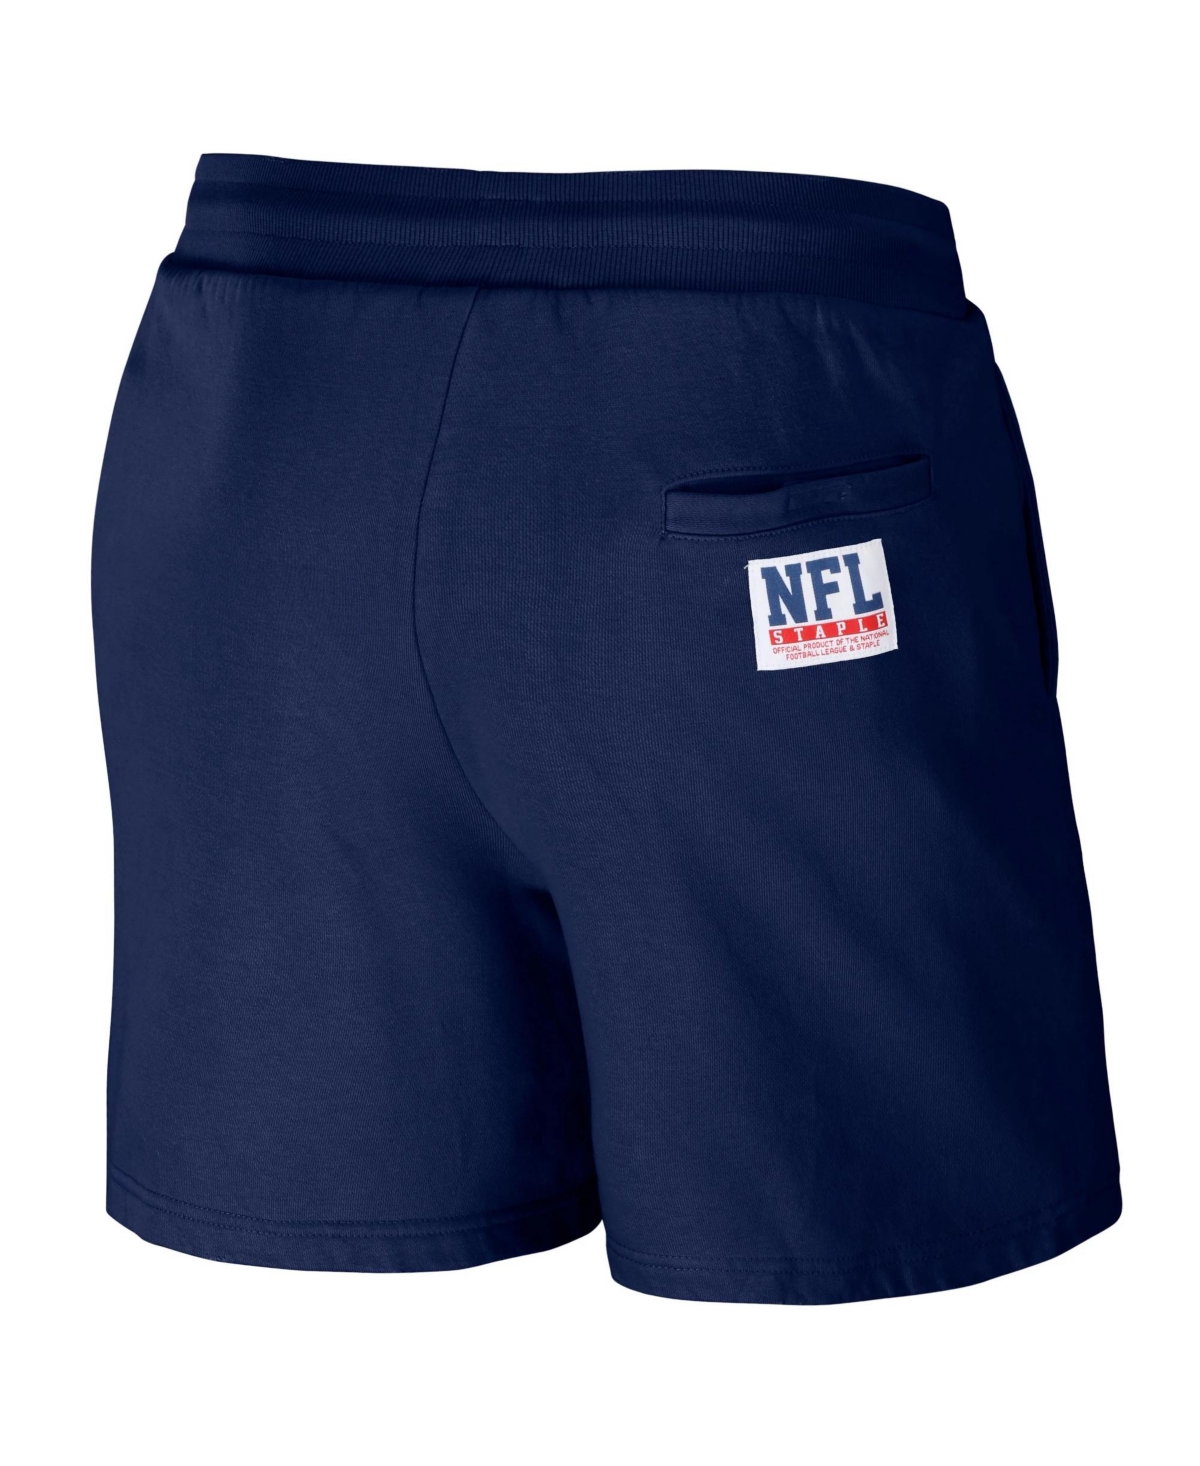 Shop Nfl Properties Men's Nfl X Staple Navy Seattle Seahawks New Age Throwback Vintage-like Wash Fleece Short